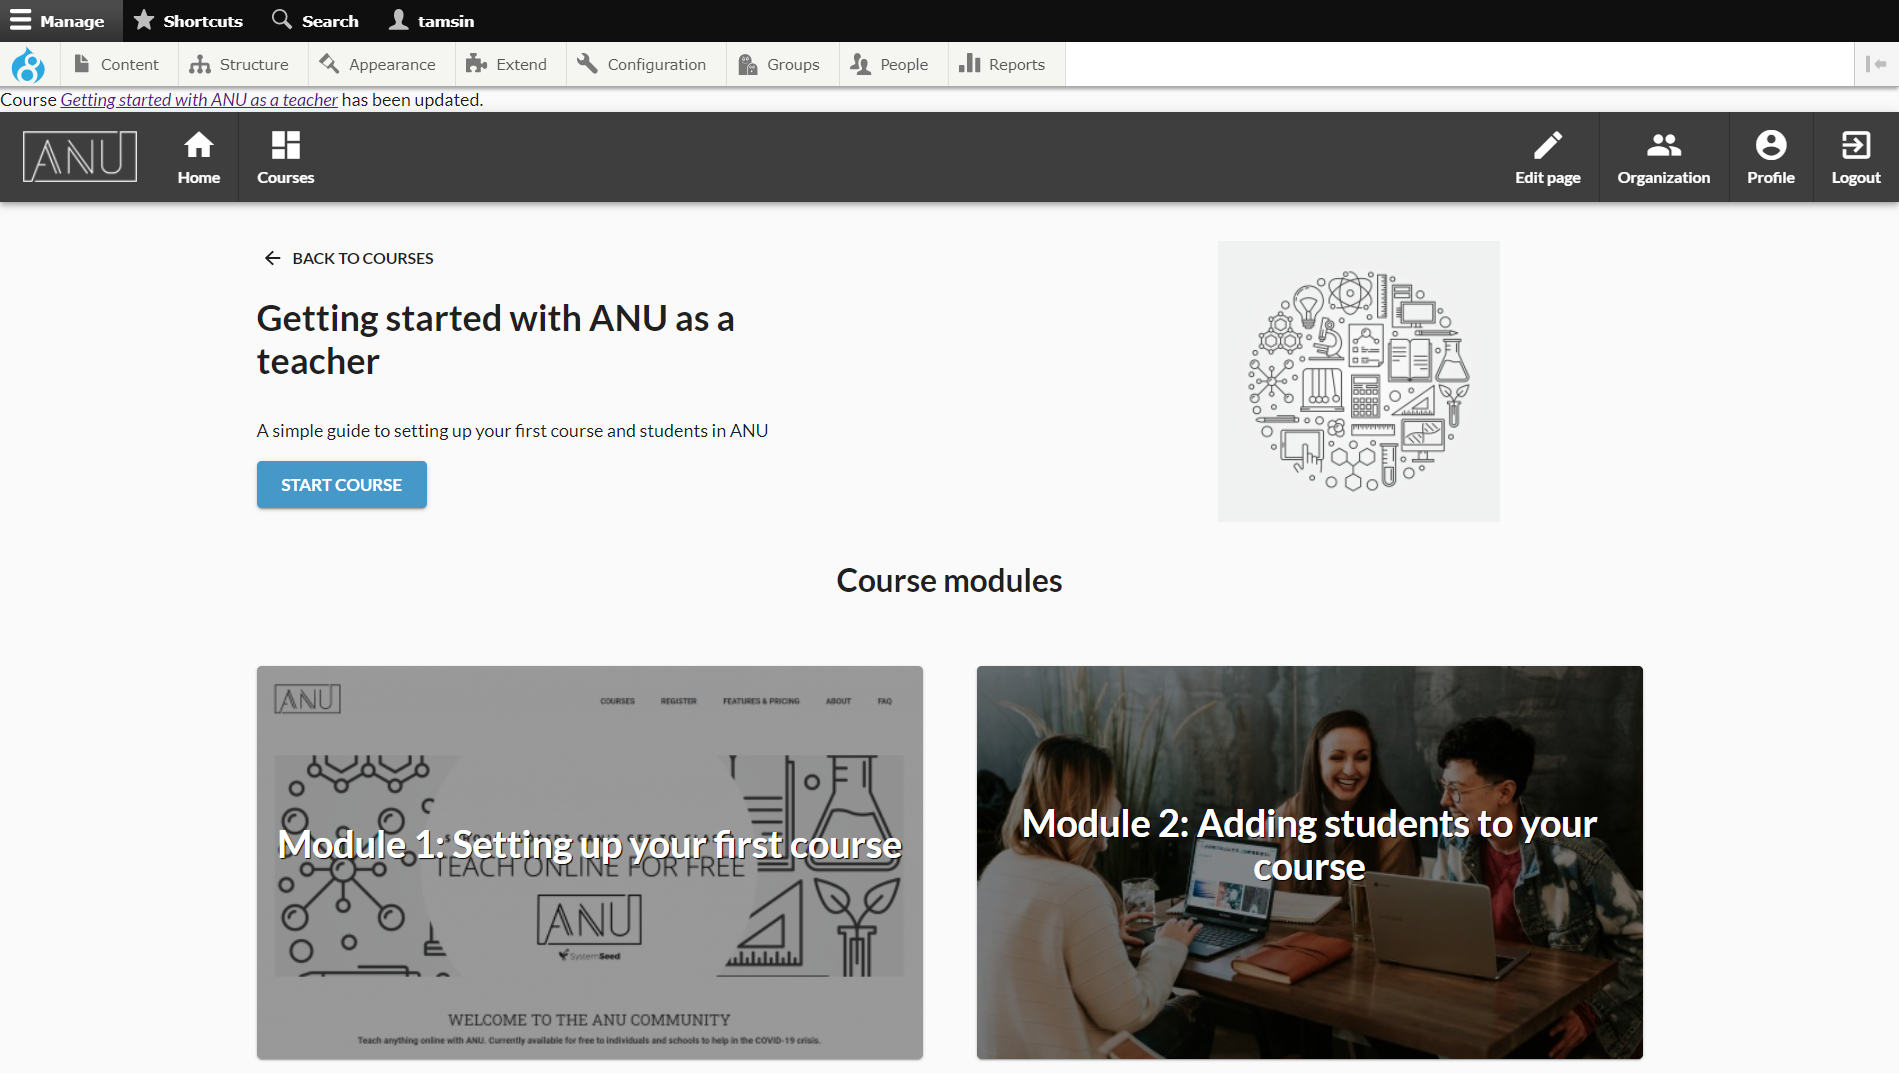 Screen shot of ANU.Community course showing two modules